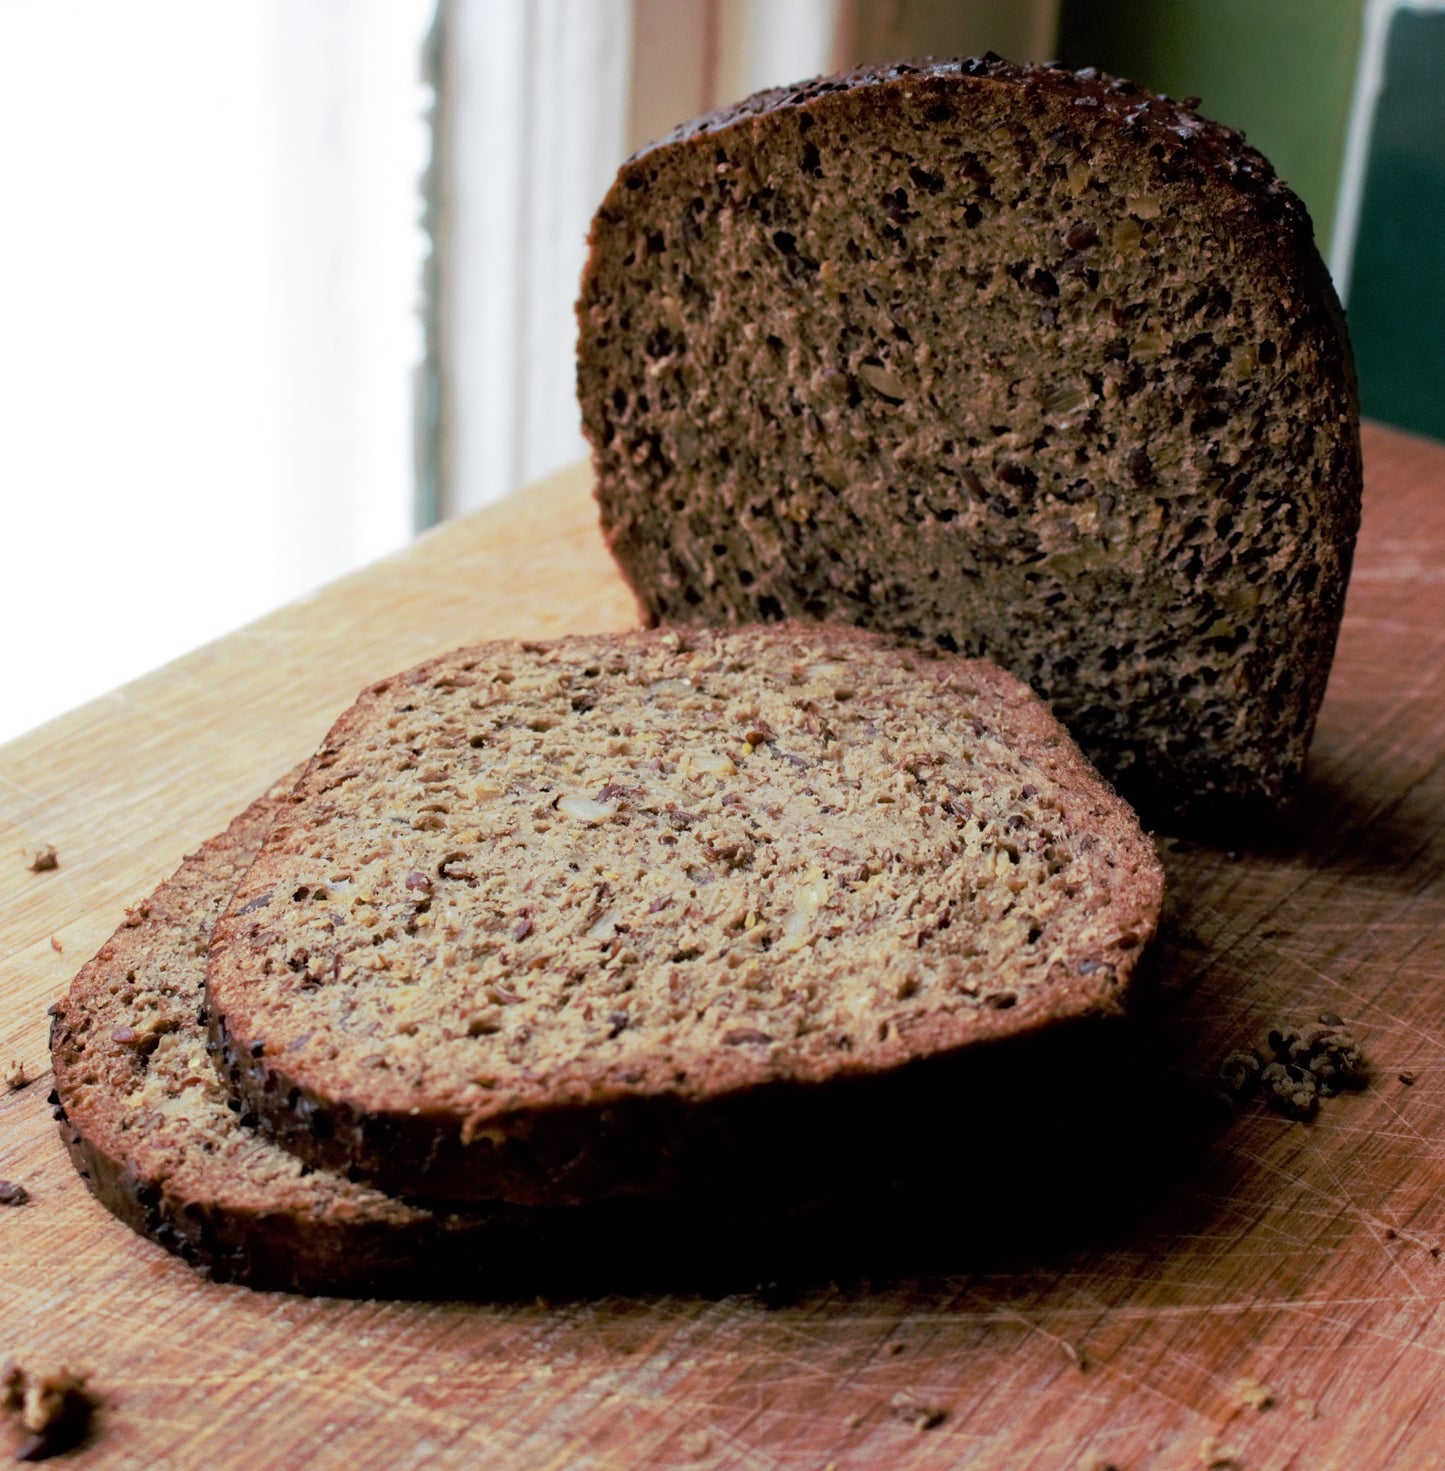 Original Flax Keto Bread 250g